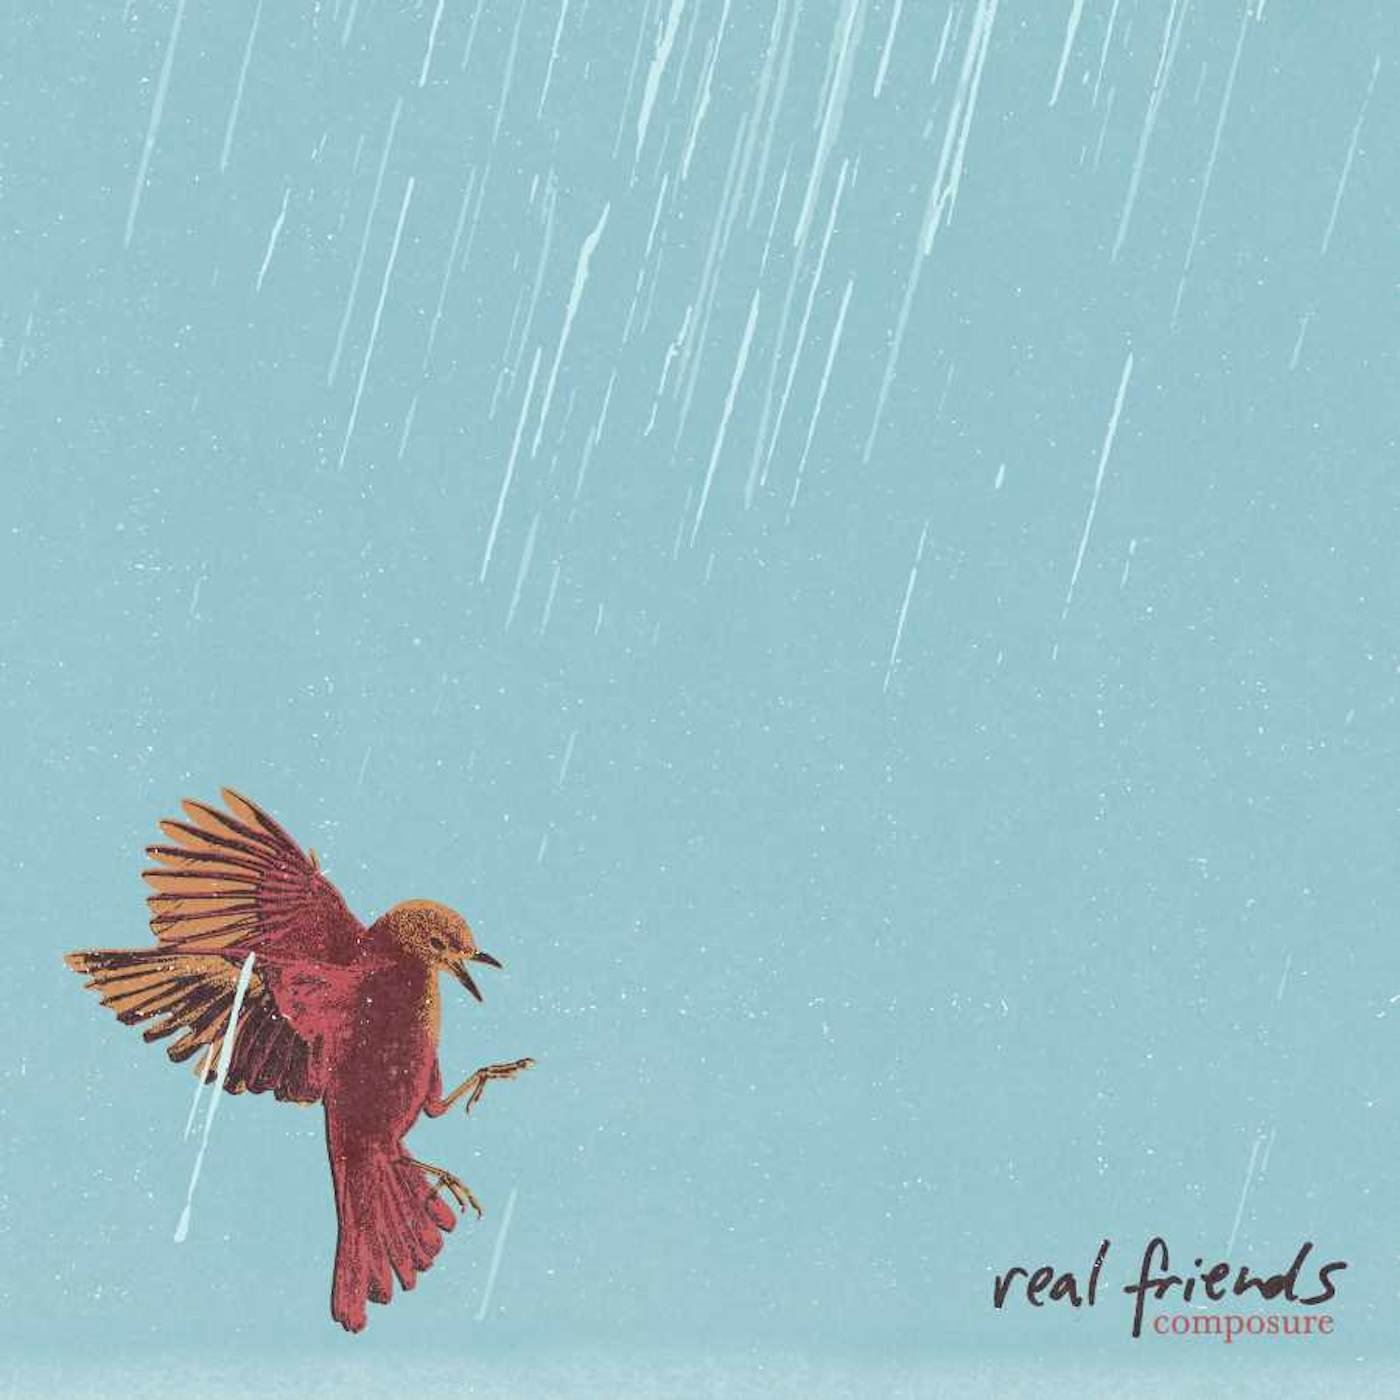 Real Friends Composure (LP) Vinyl Record